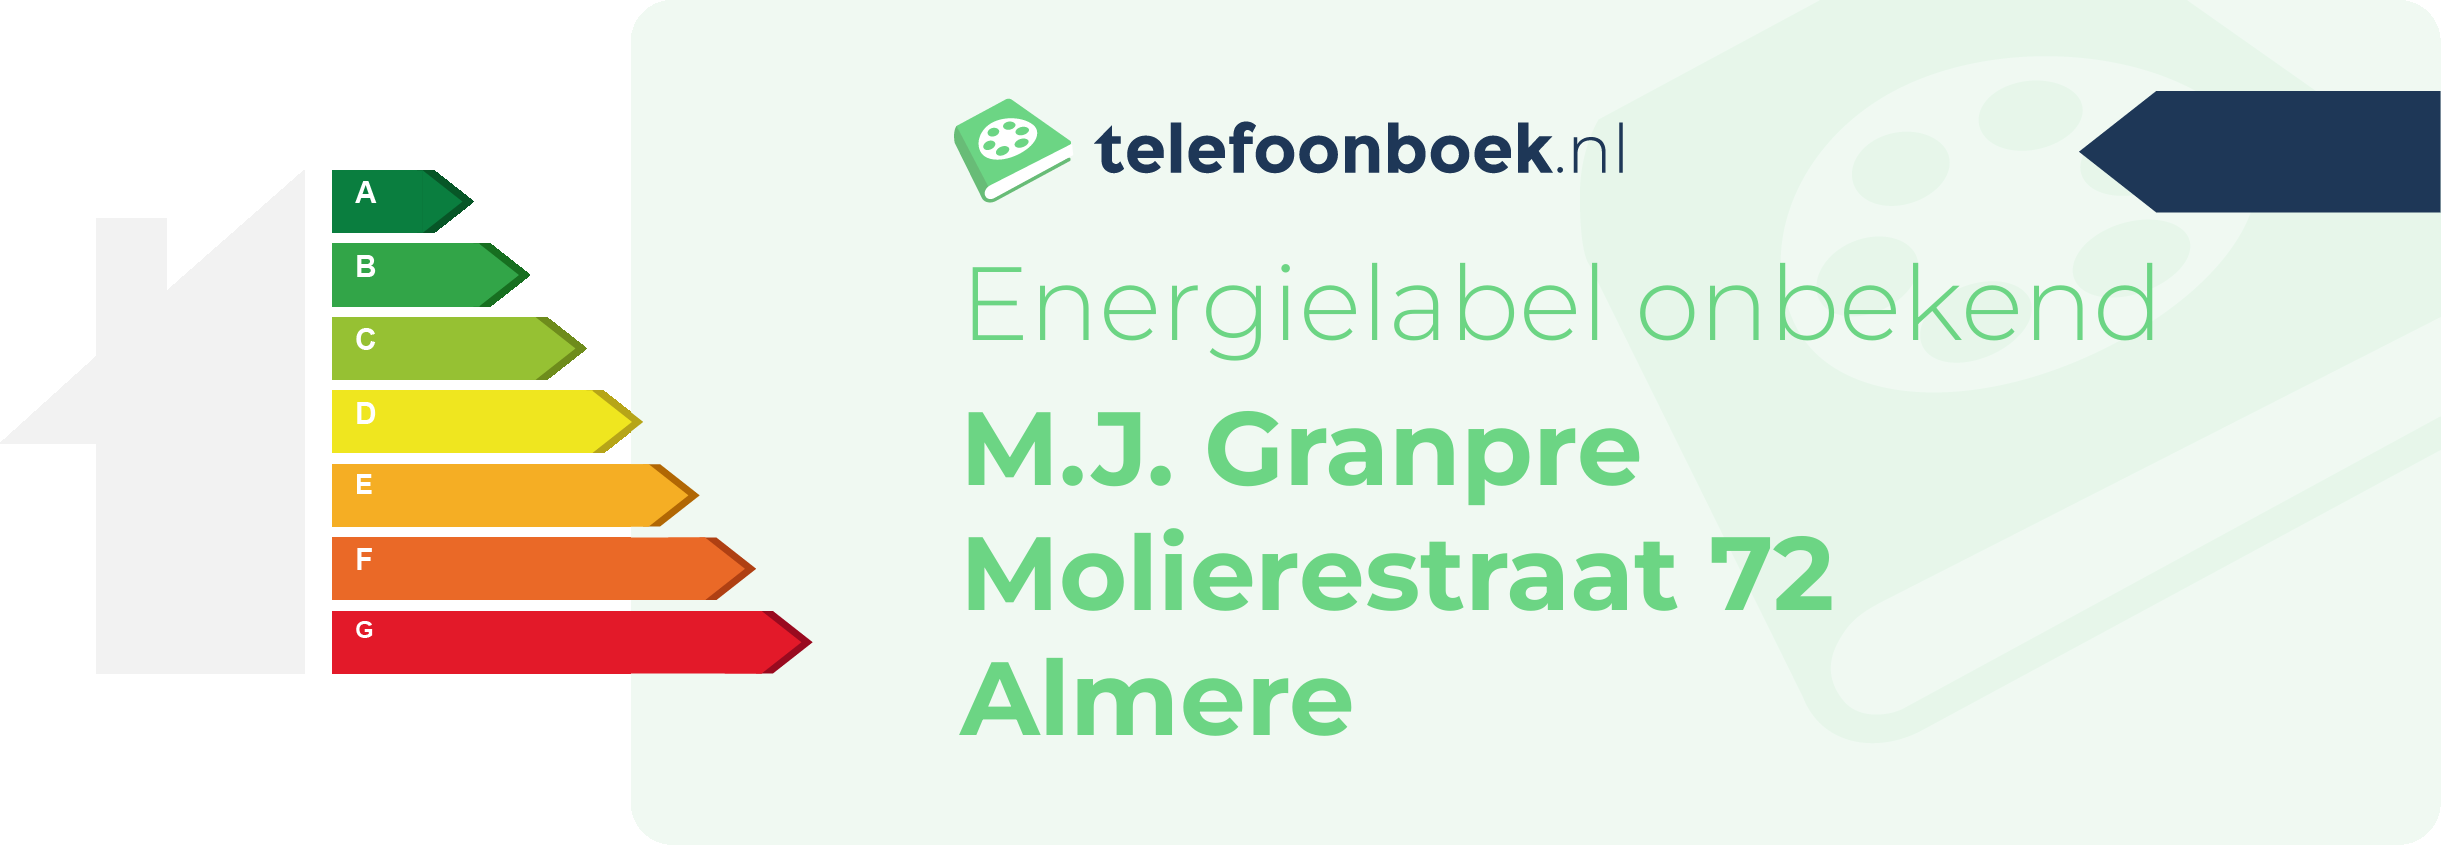 Energielabel M.J. Granpre Molierestraat 72 Almere